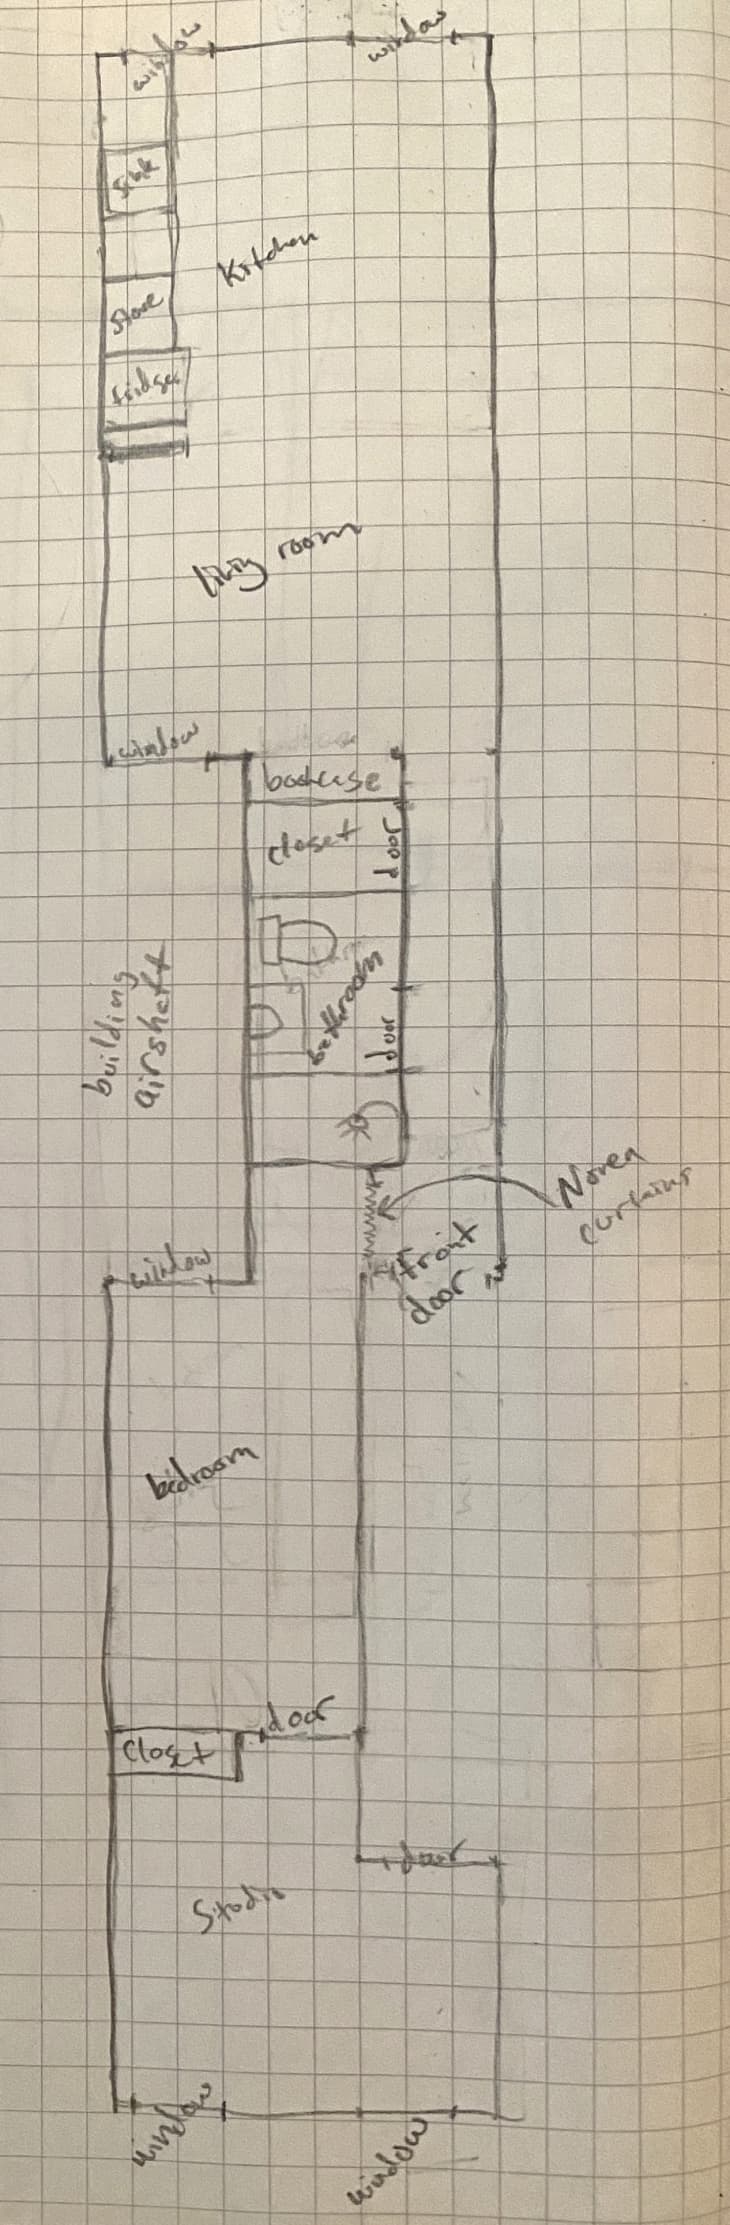 floor plan of brooklyn apartment